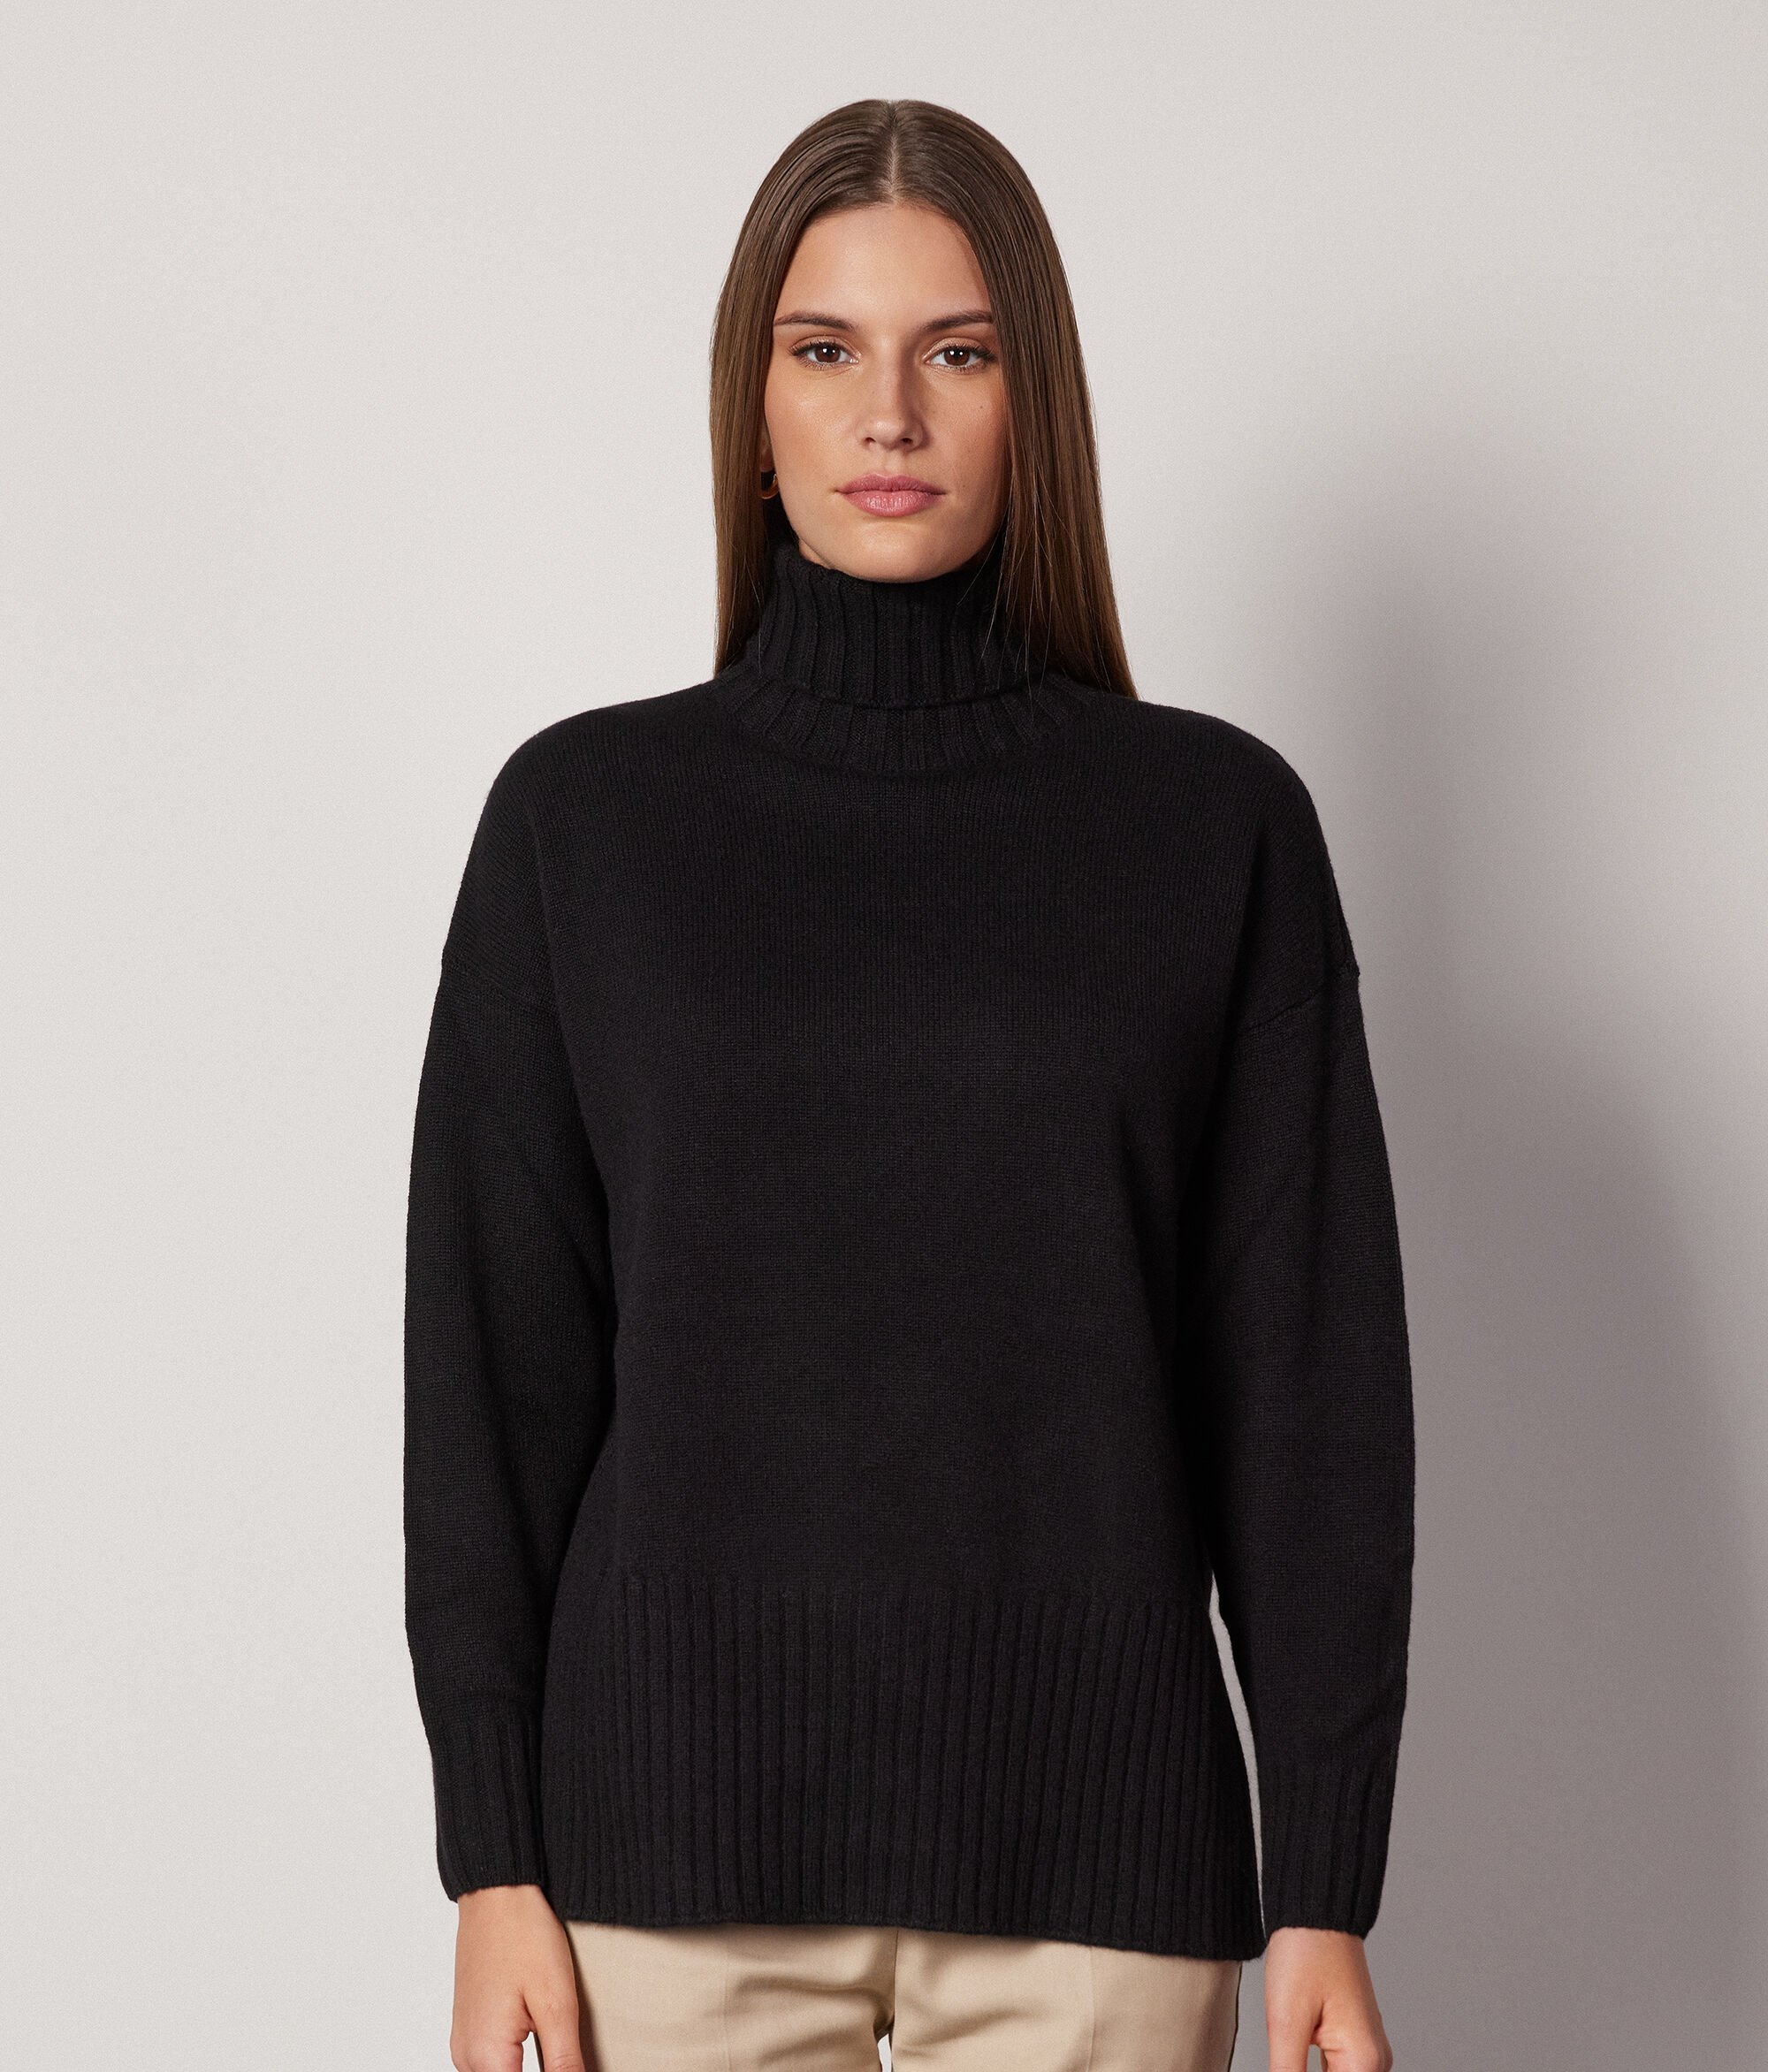 Oversized Turtleneck Sweater in Ultrasoft Cashmere